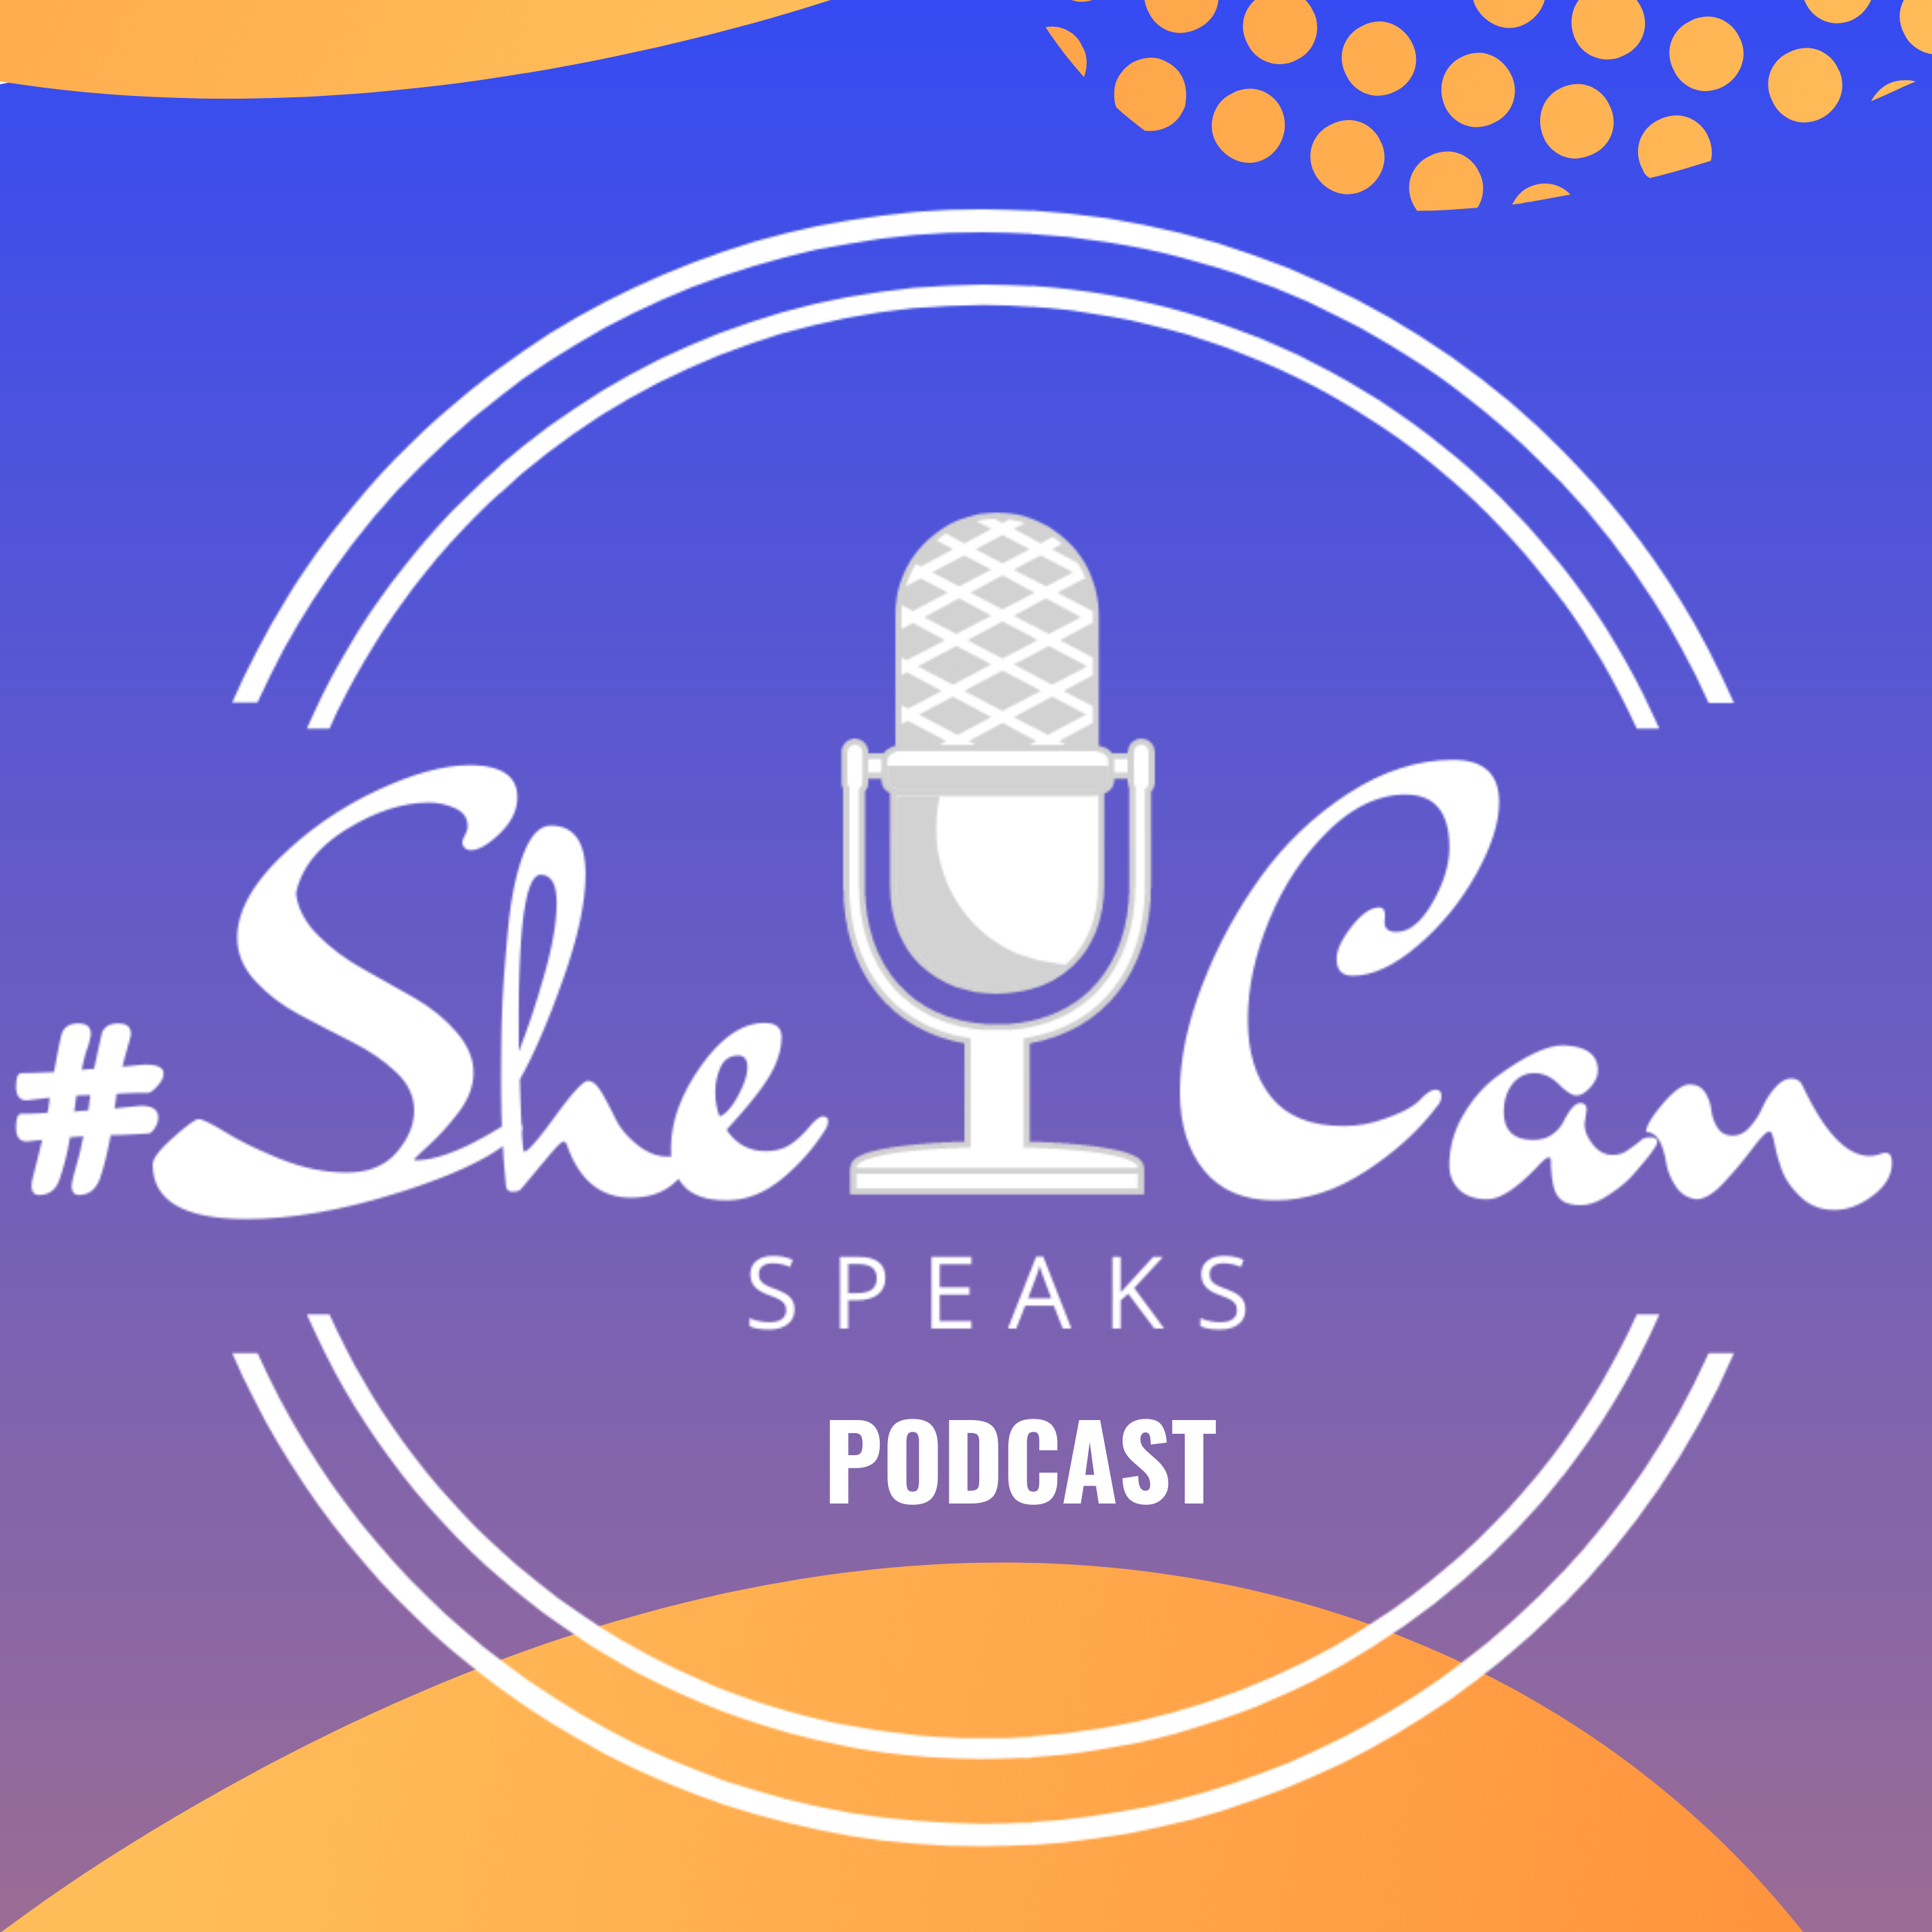 SheCan Speaks Podcast